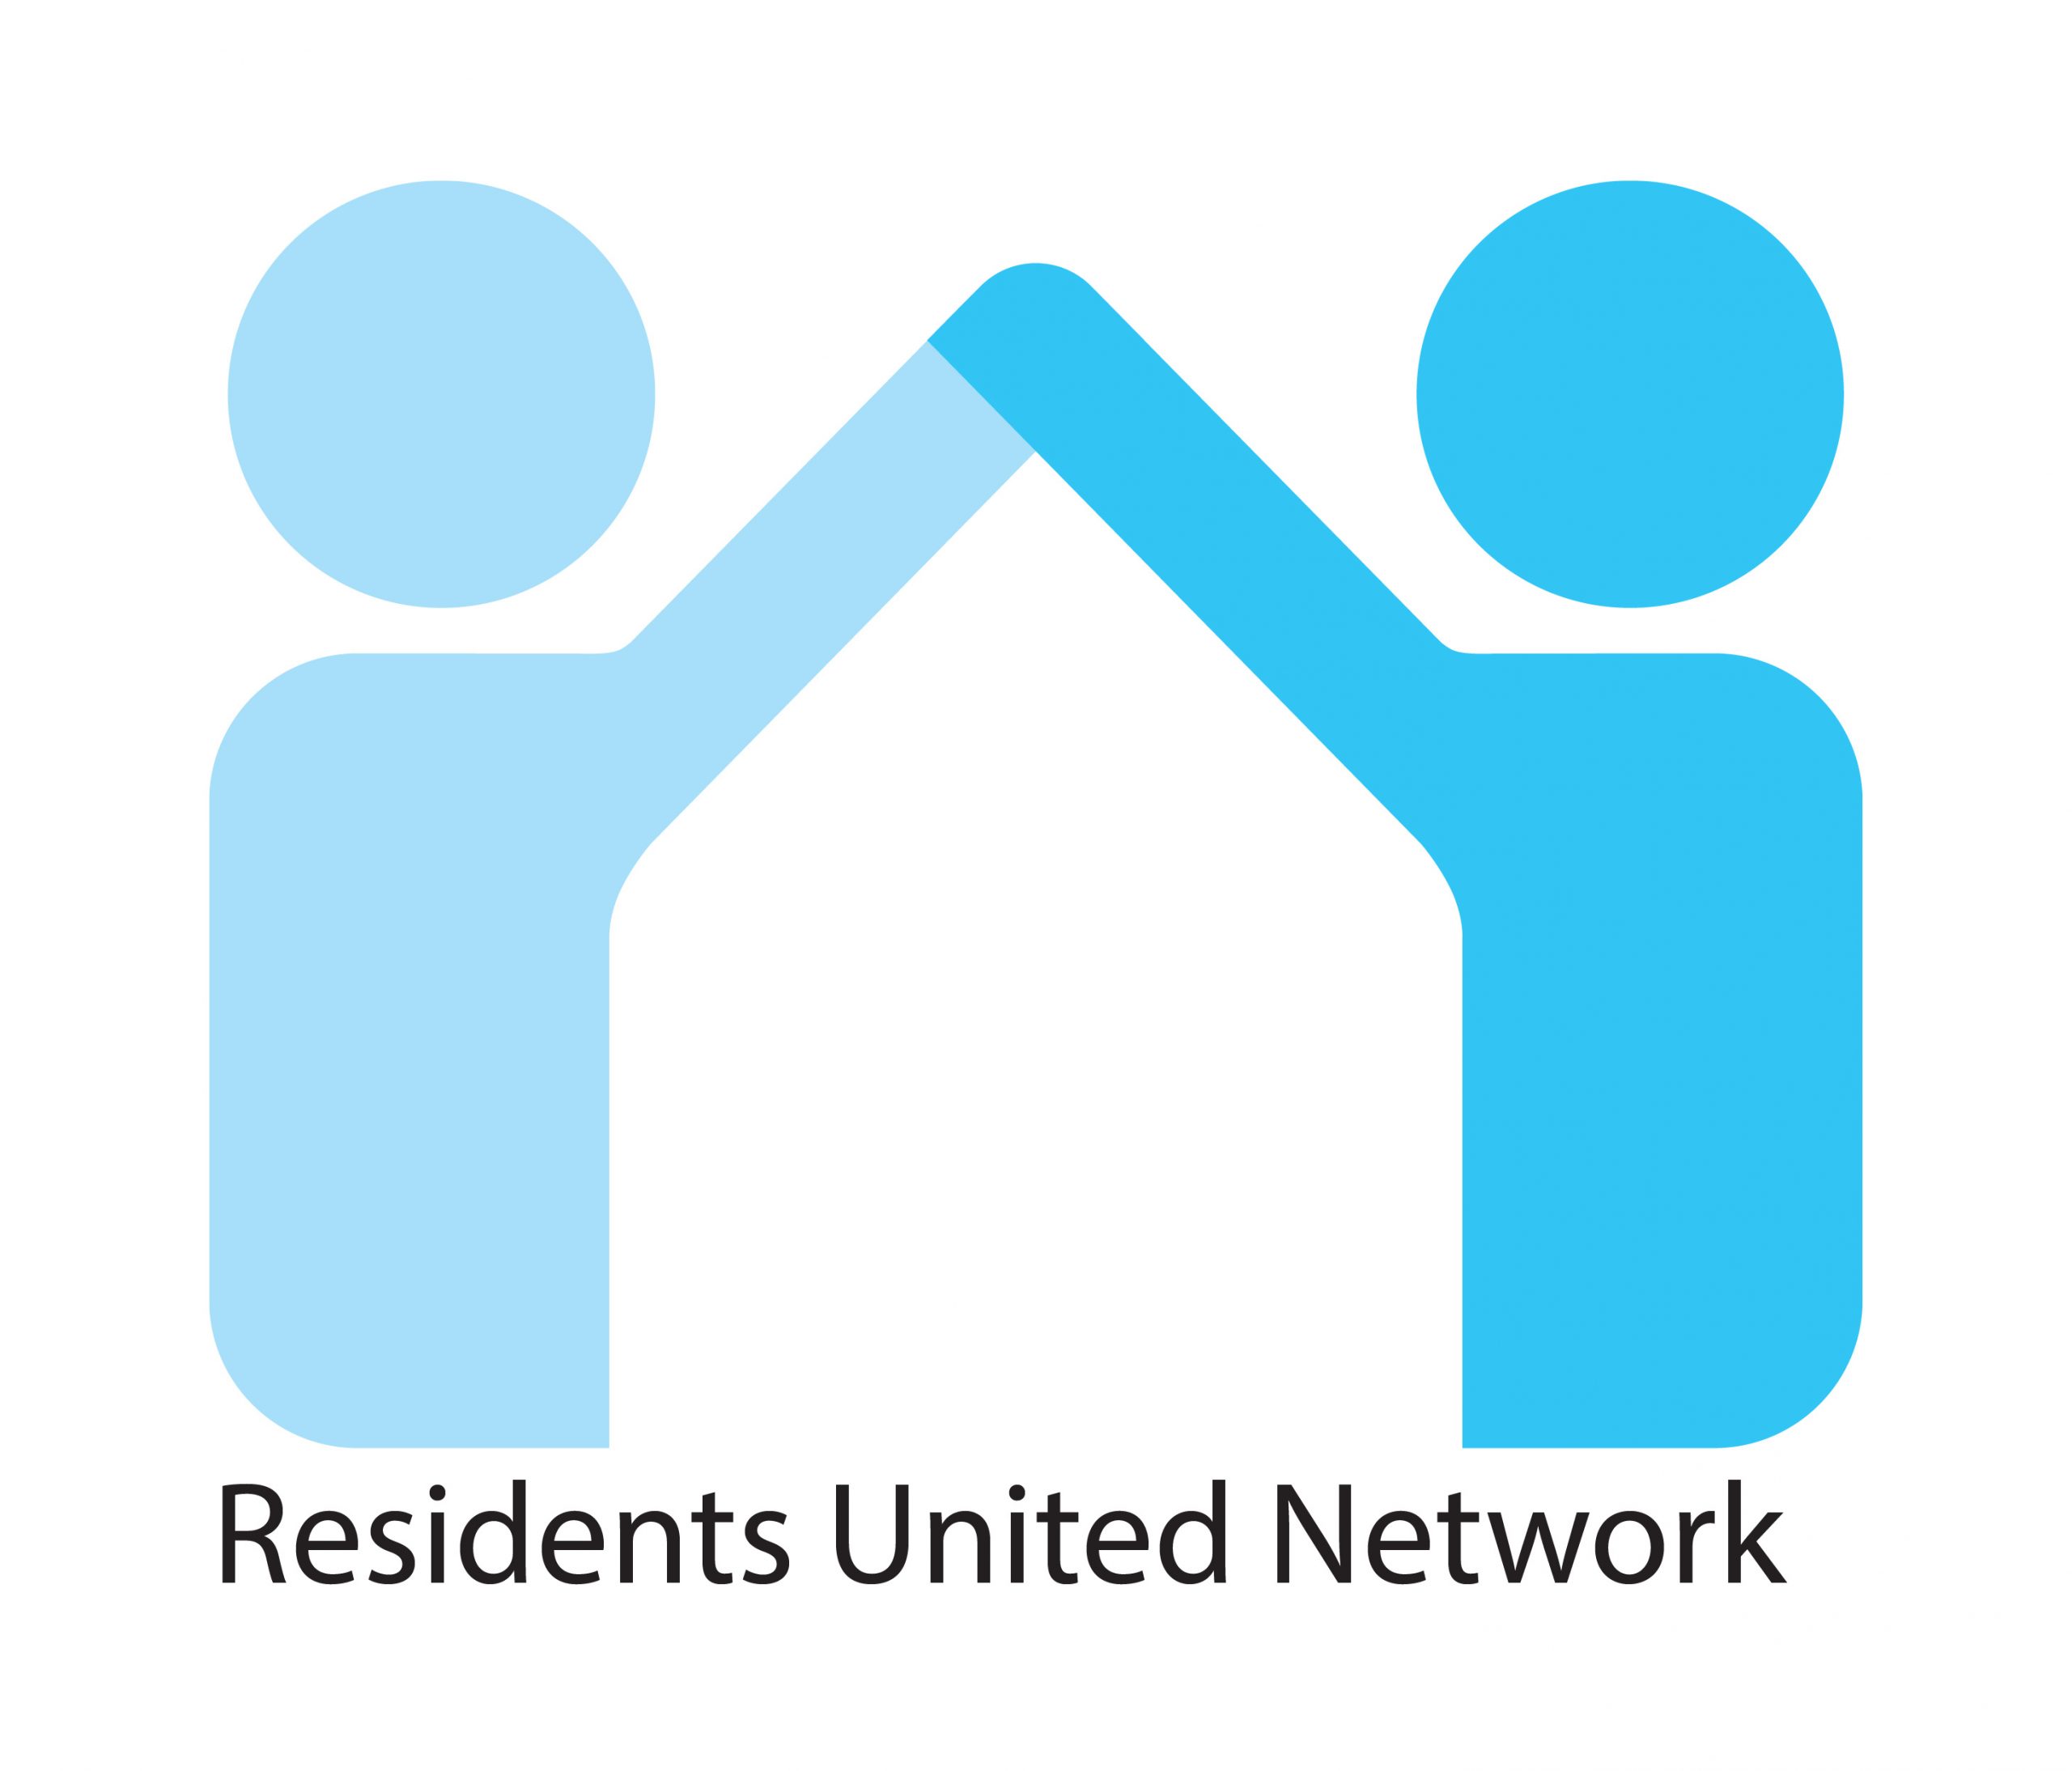 Residents United Network logo